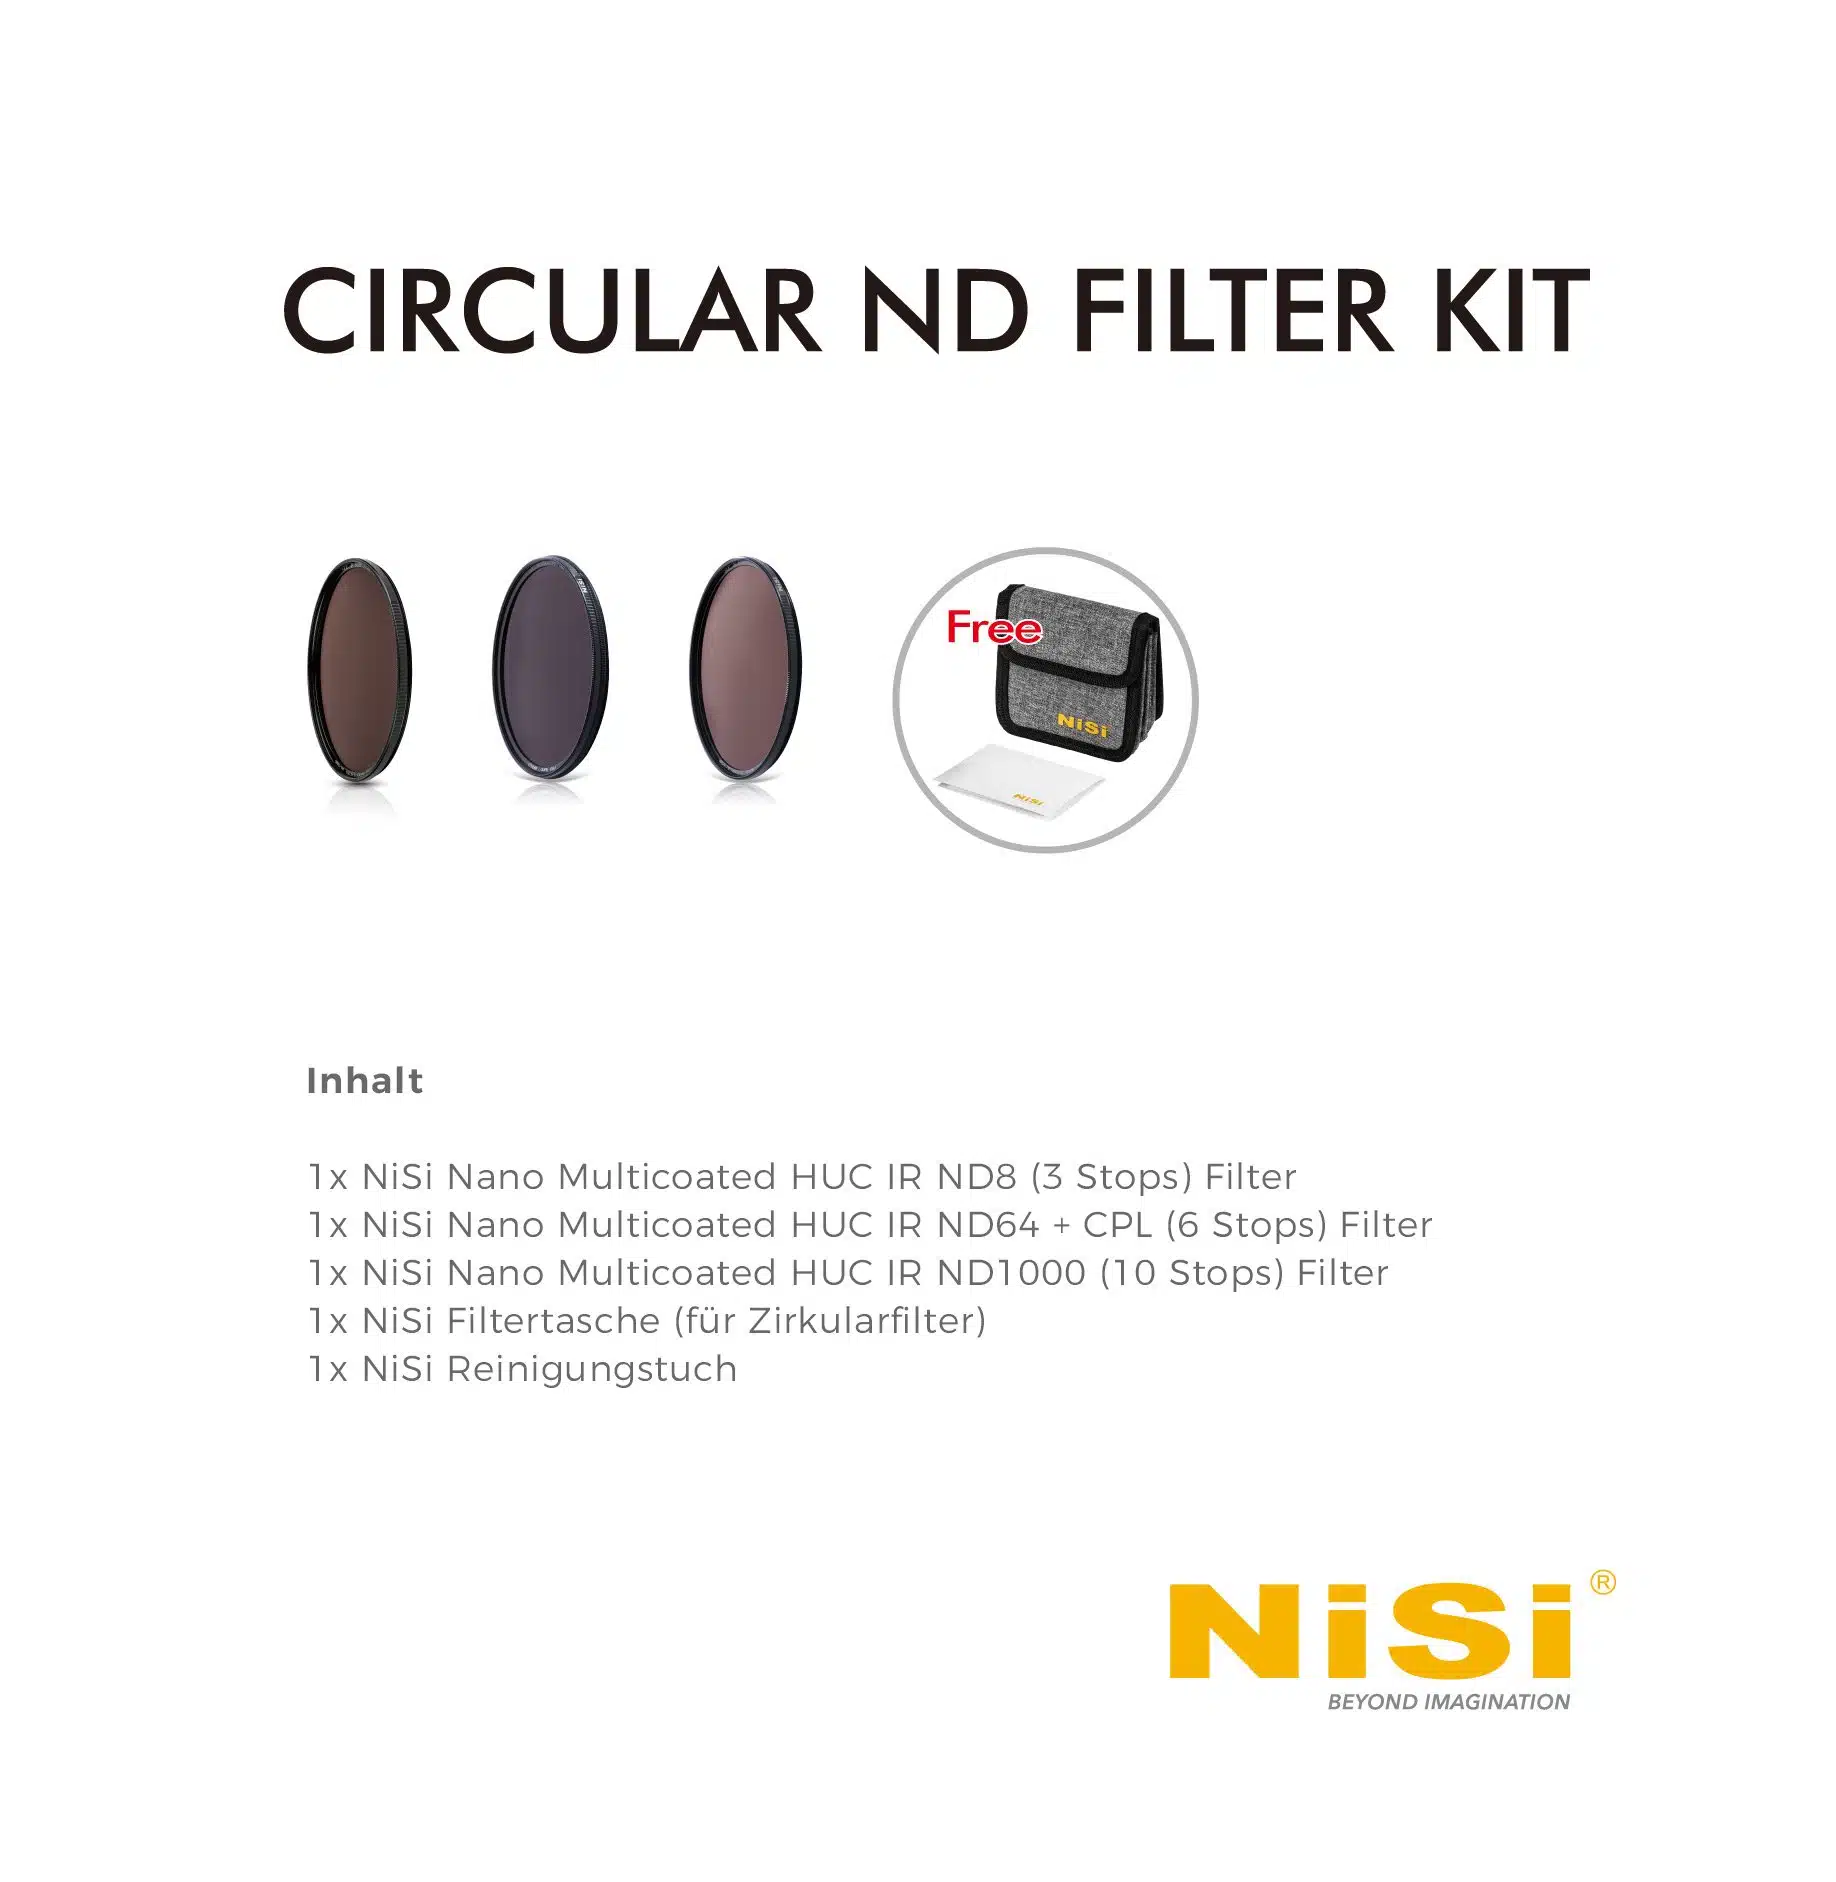 NiSi Circular ND Filter Kit Schraubfilter Graufilter Kit Inhalt